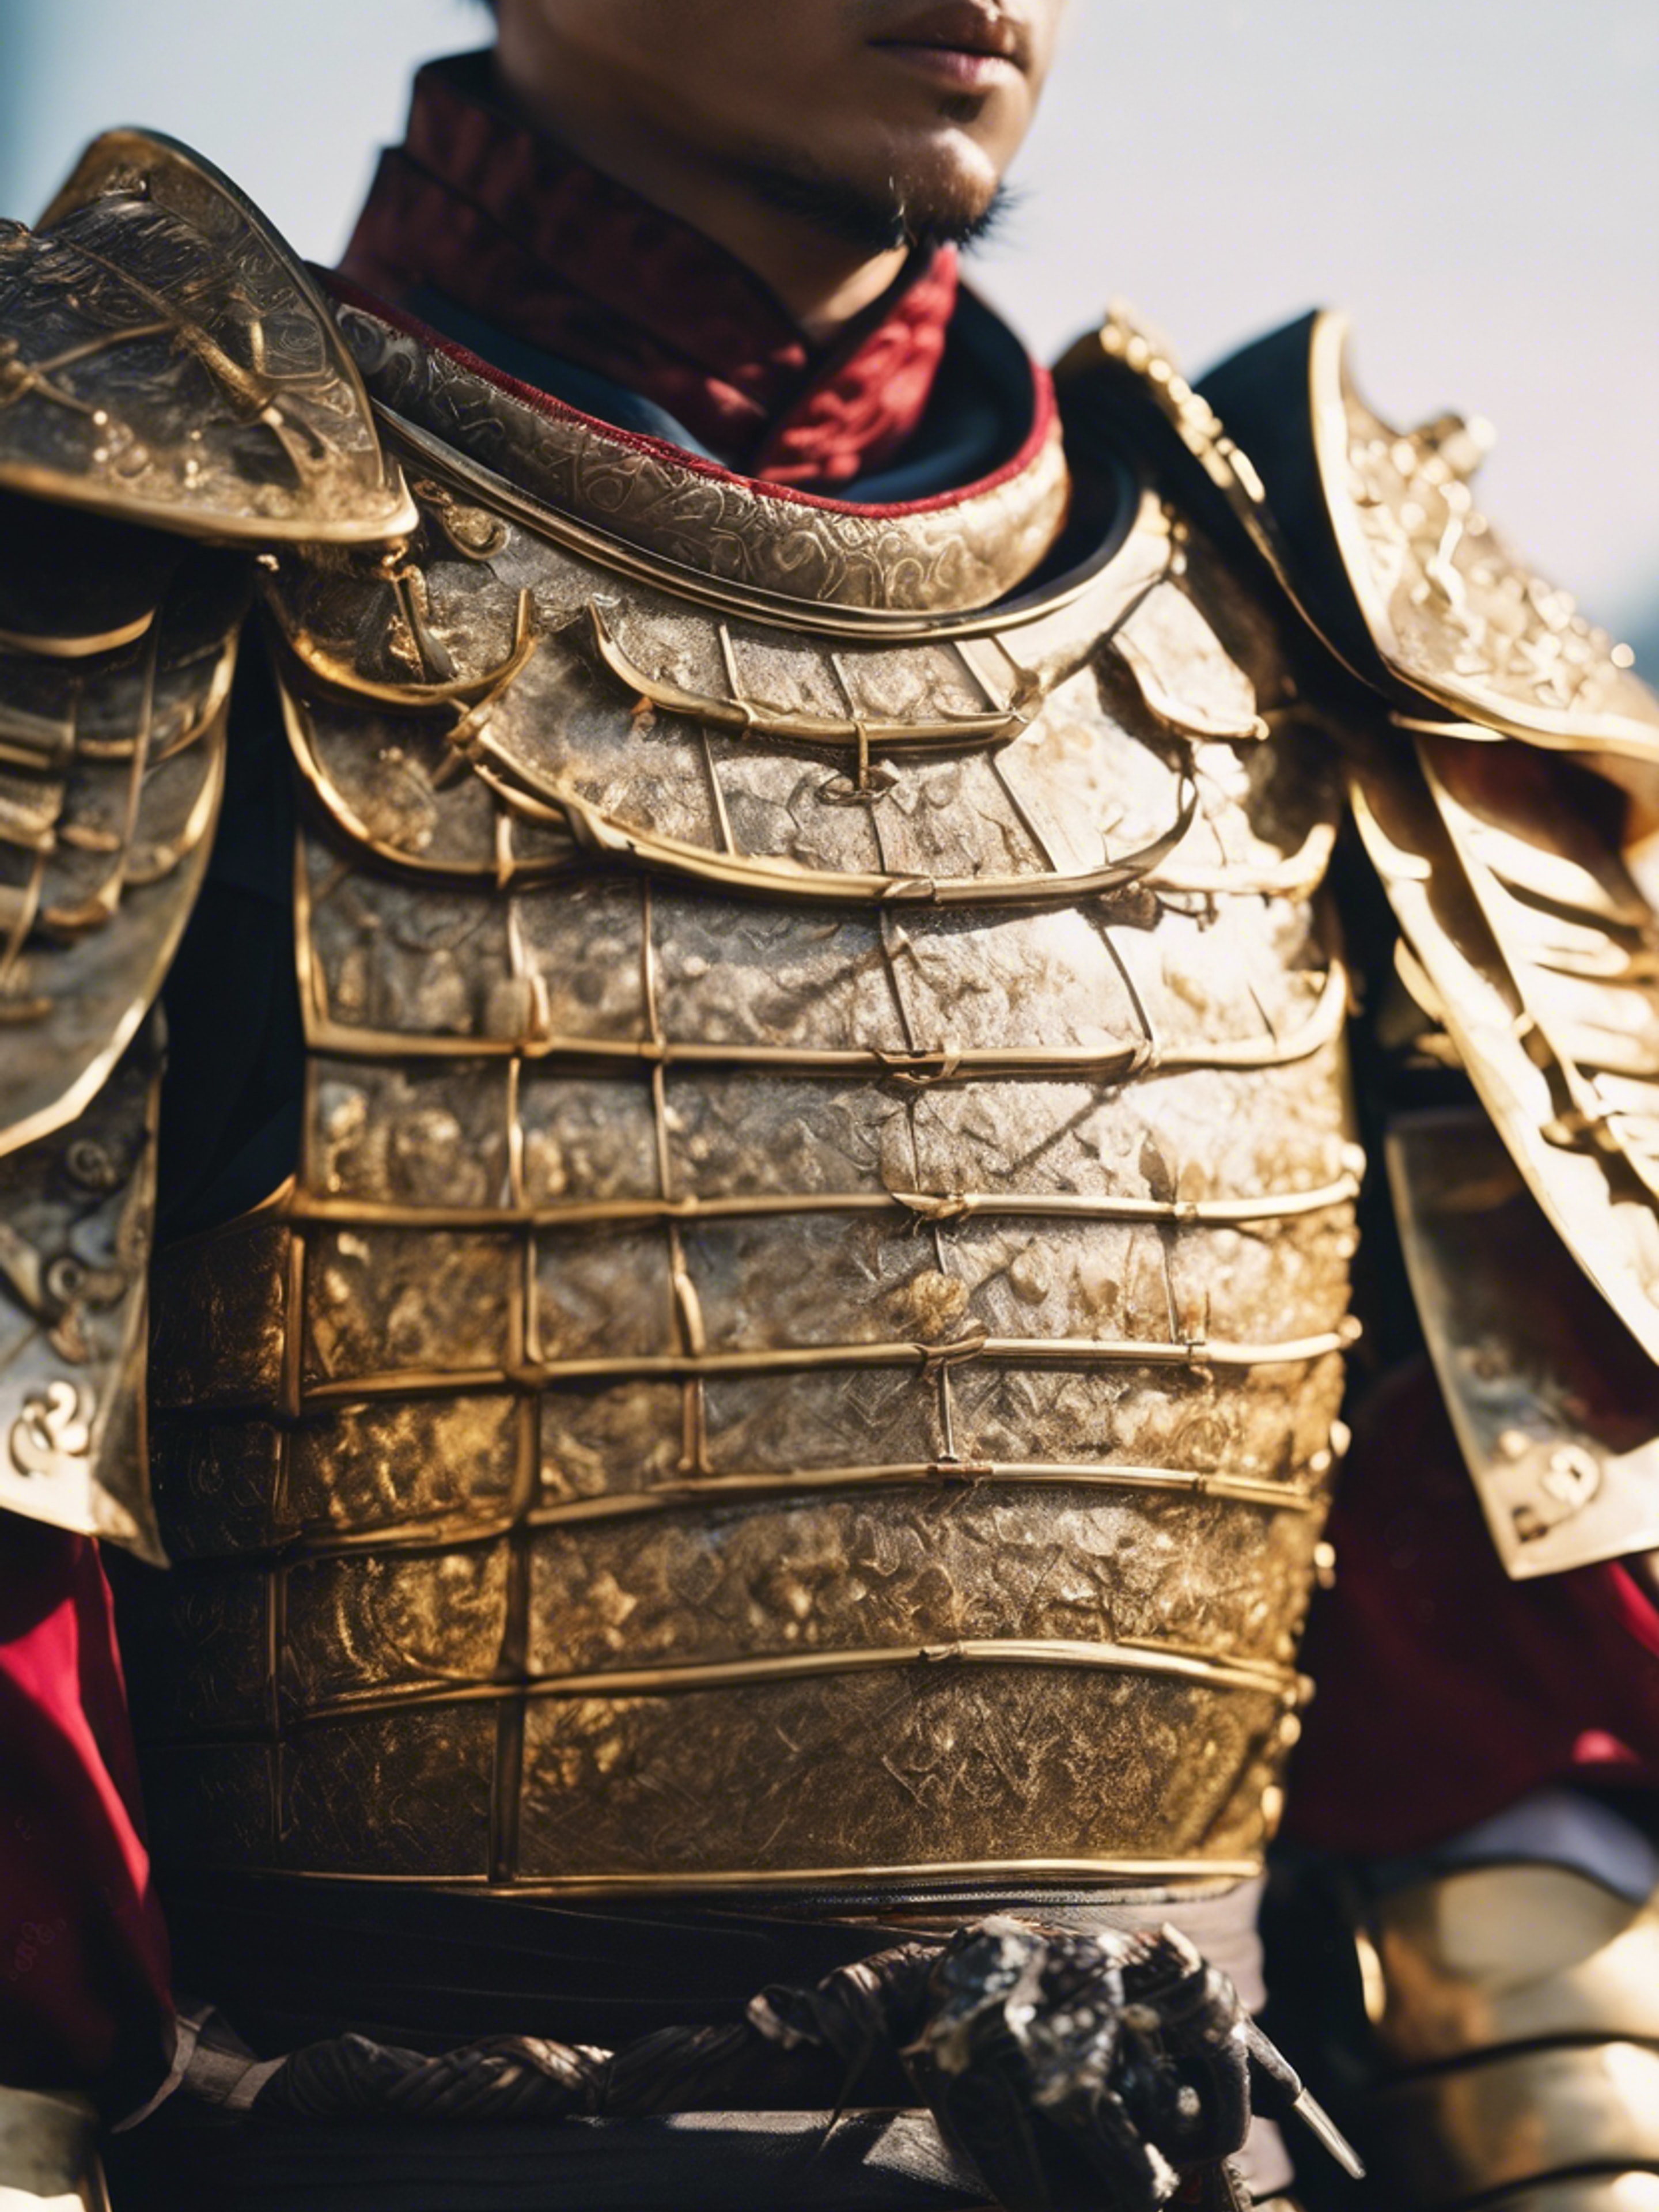 A close-up detail of a beautiful samurai armor glistening in the sunlight壁紙[f86ed1772fa04d06b0b3]